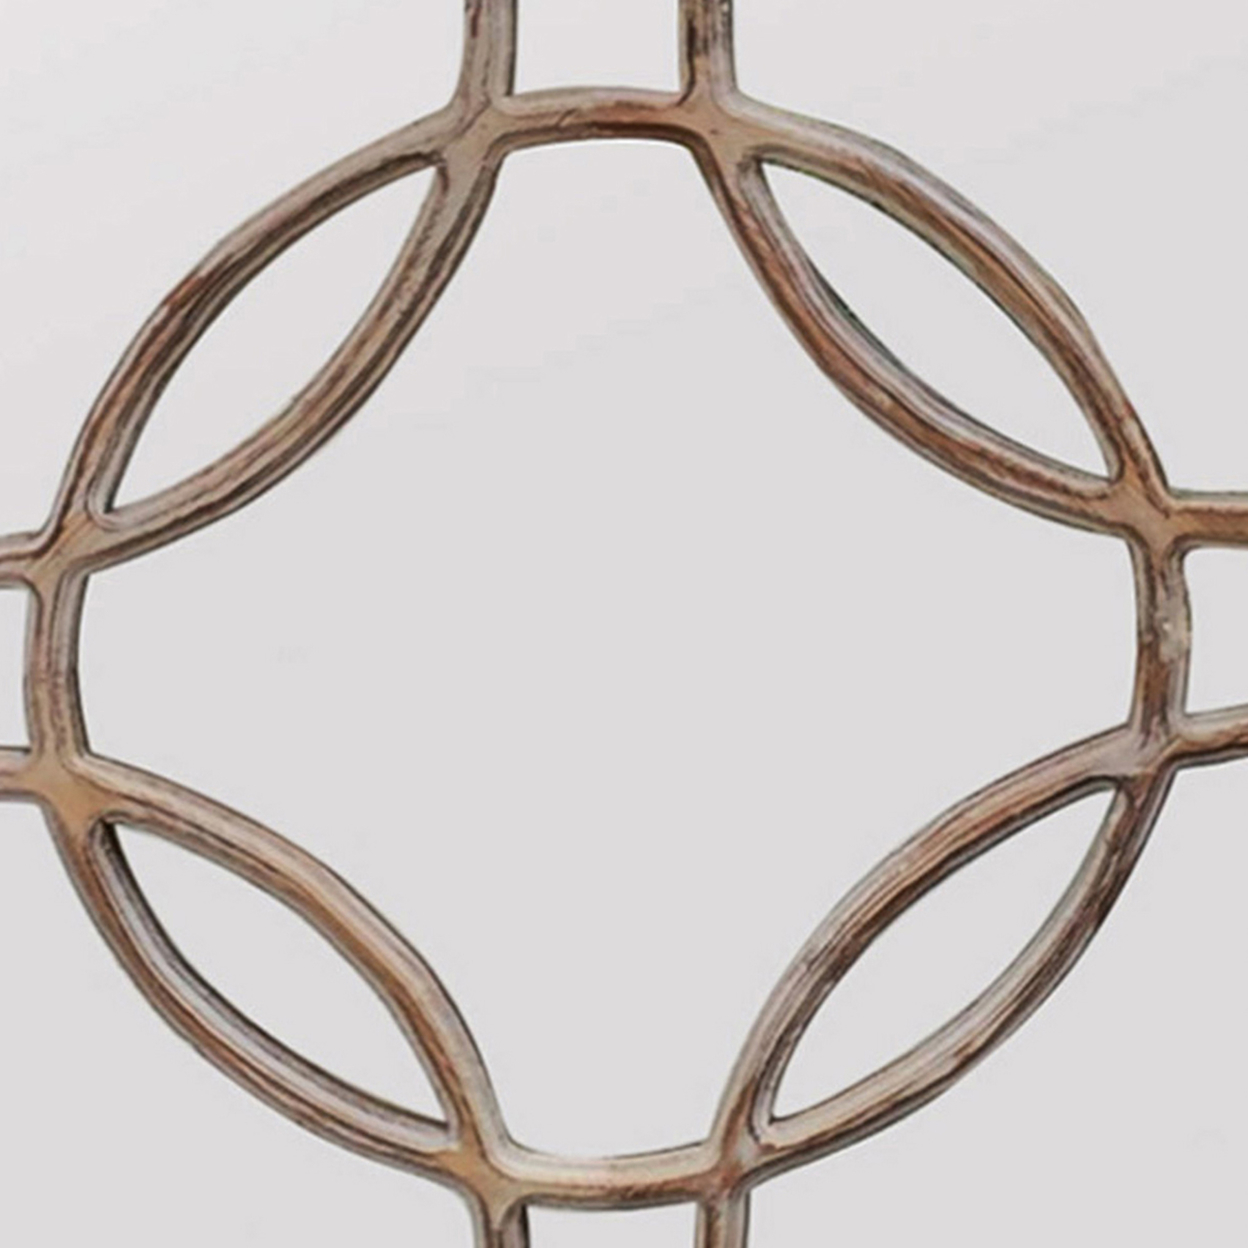 Arched Top Wood Encased Floor Mirror With Ring Design, Brown- Saltoro Sherpi